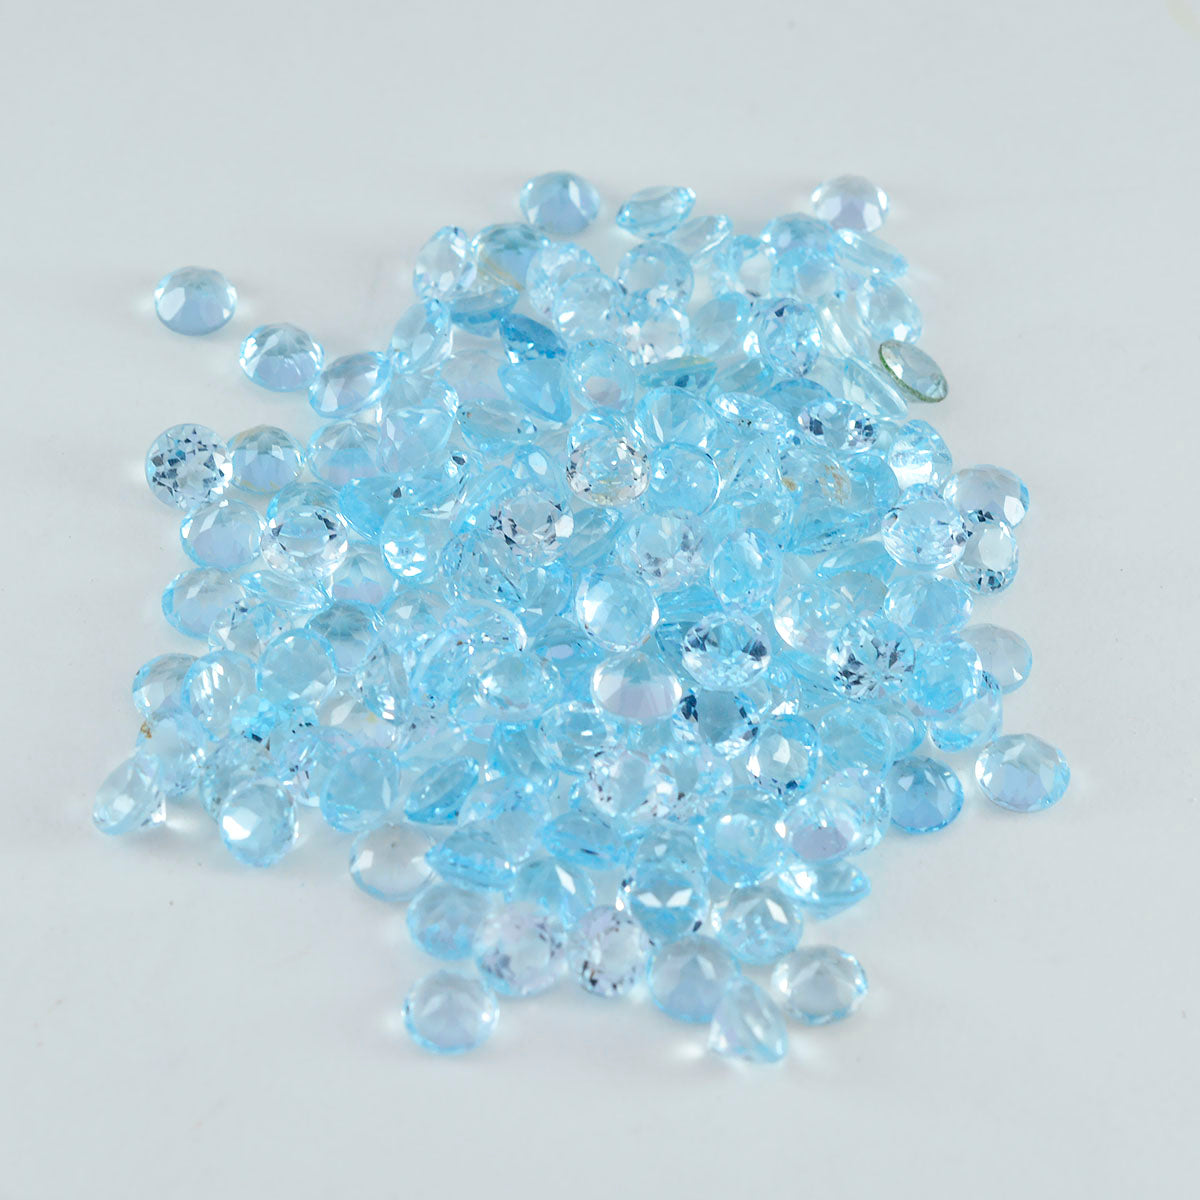 Riyogems 1PC Real Blue Topaz Faceted 2x2 mm Round Shape startling Quality Gemstone